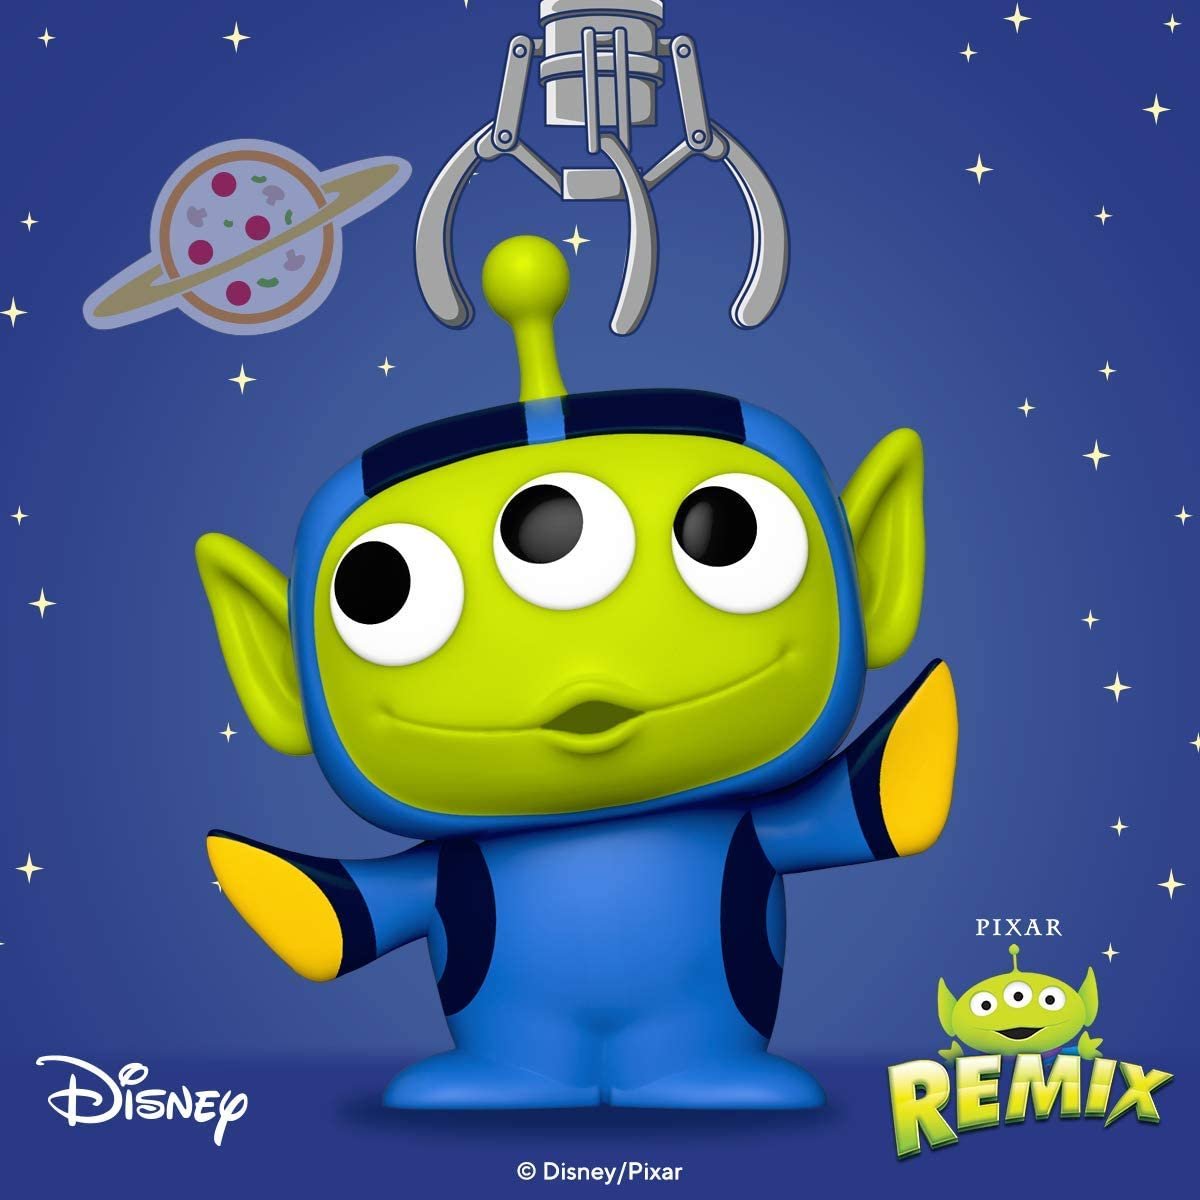 Funko Pop! Disney: Pixar Alien Remix - Alien as Dory Vinyl Figure